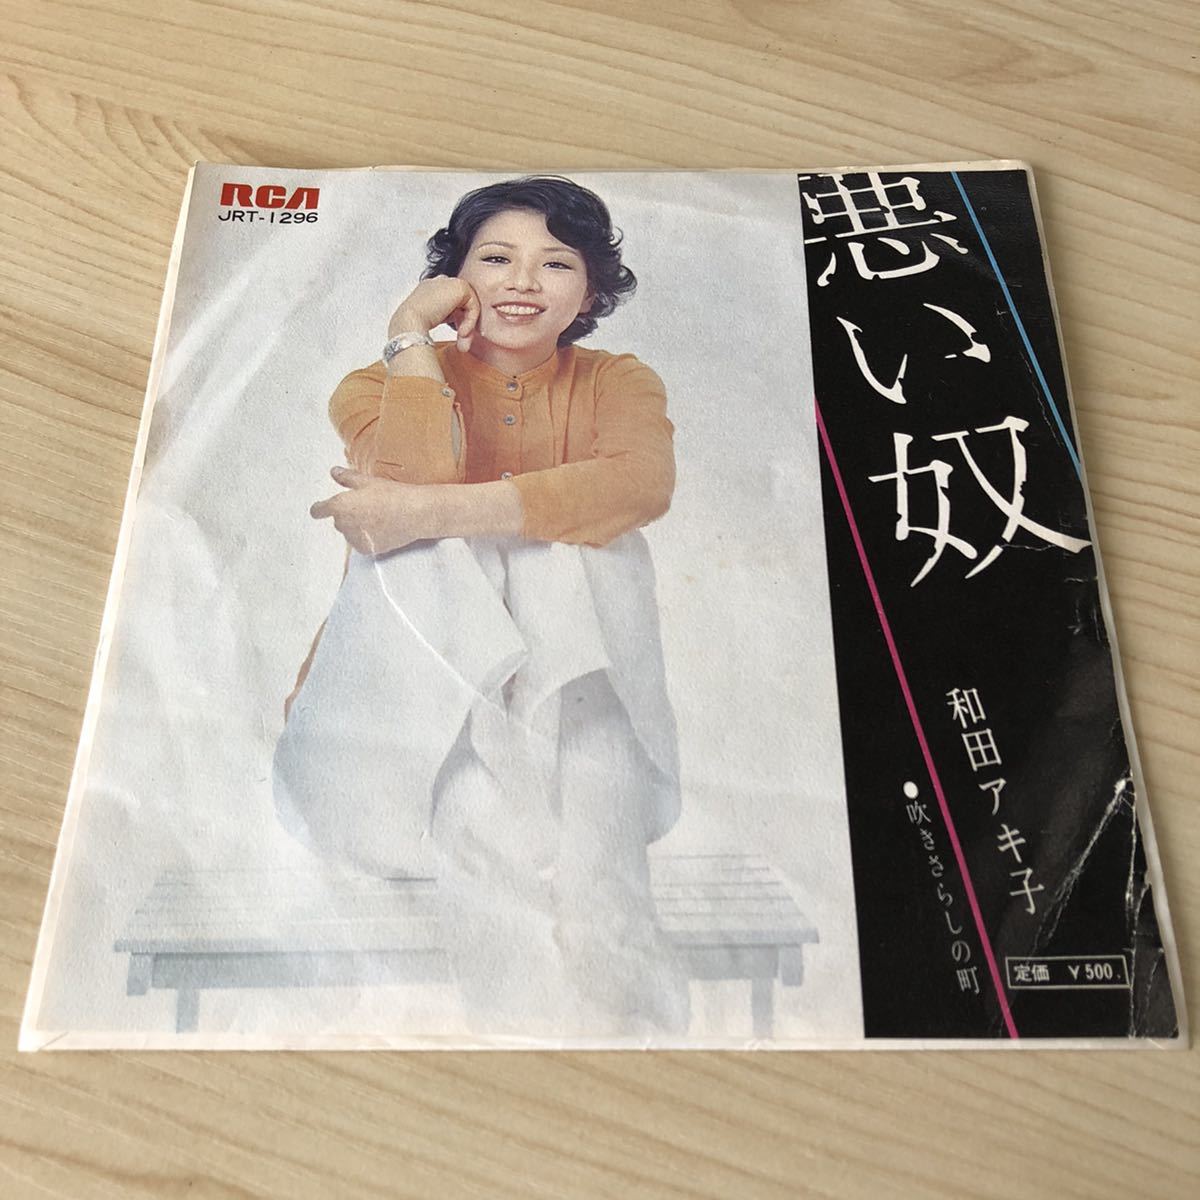 [7INCH] Akiko Wada Bad Full Breake Town Town Akiko Wada / EP Record / jrt1296 / Японский моно Showa Kayo /